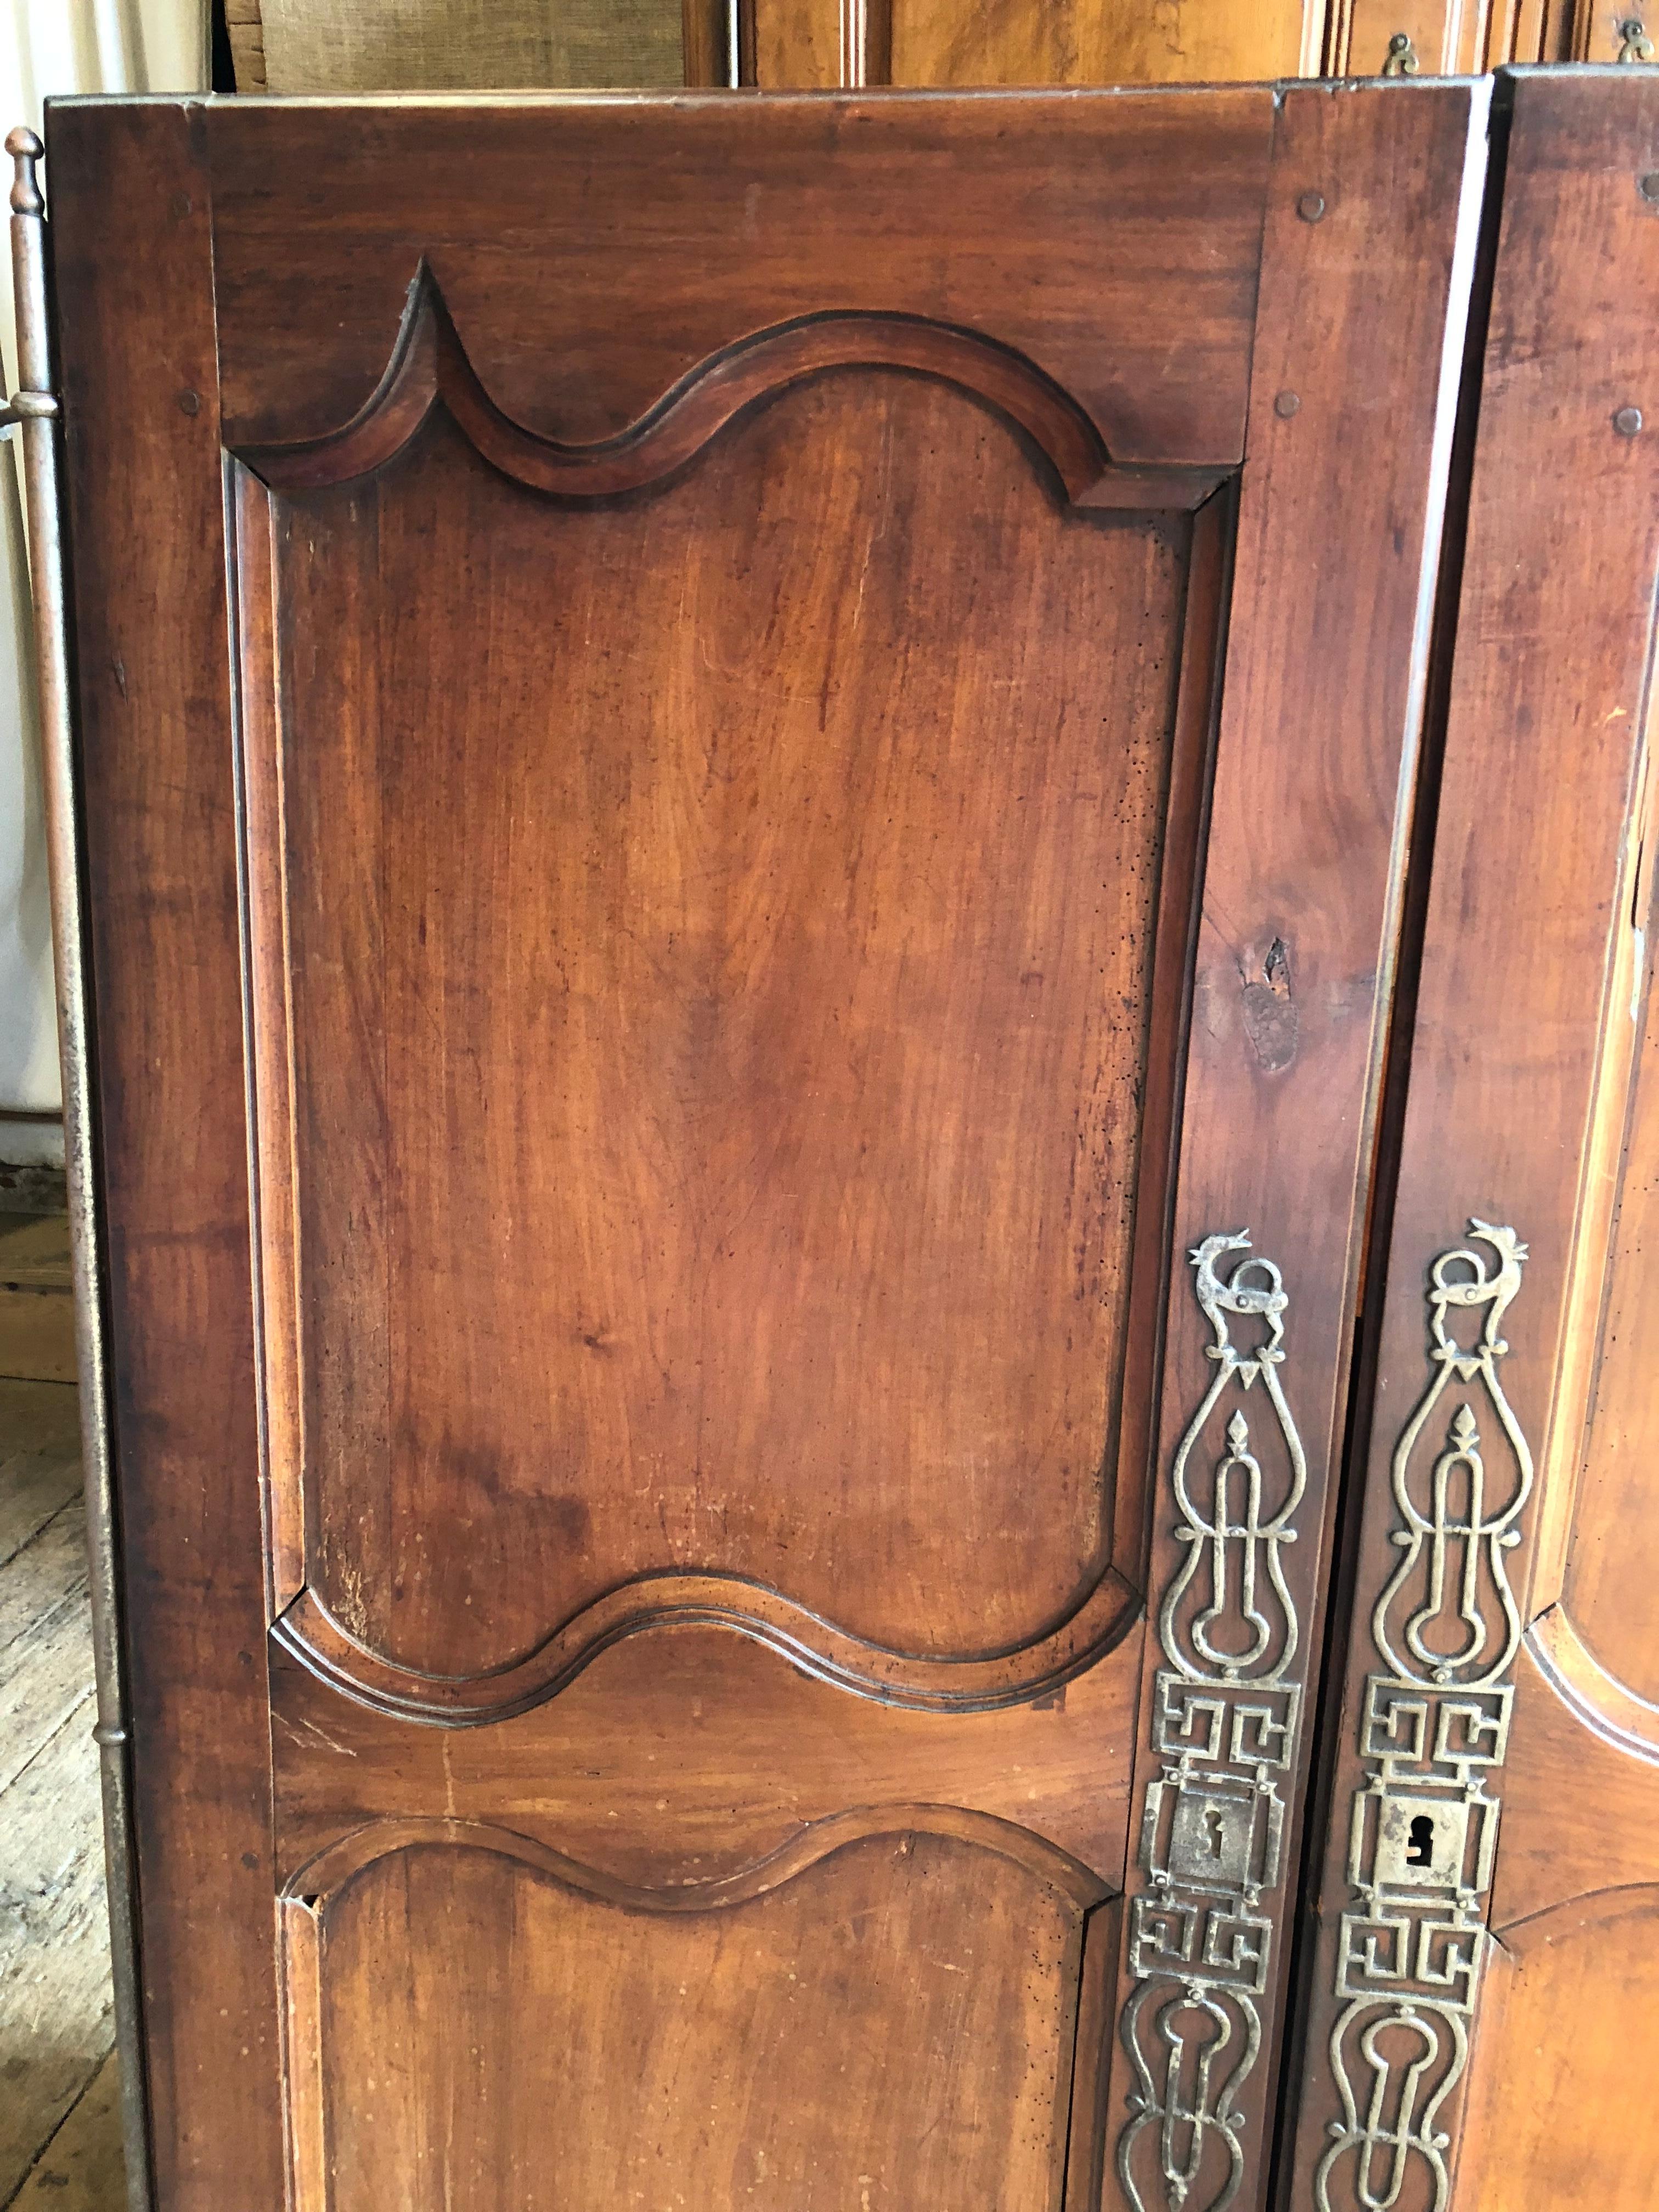 Cherry Pair of 18th Century French Doors, 62” high x 24” w each door